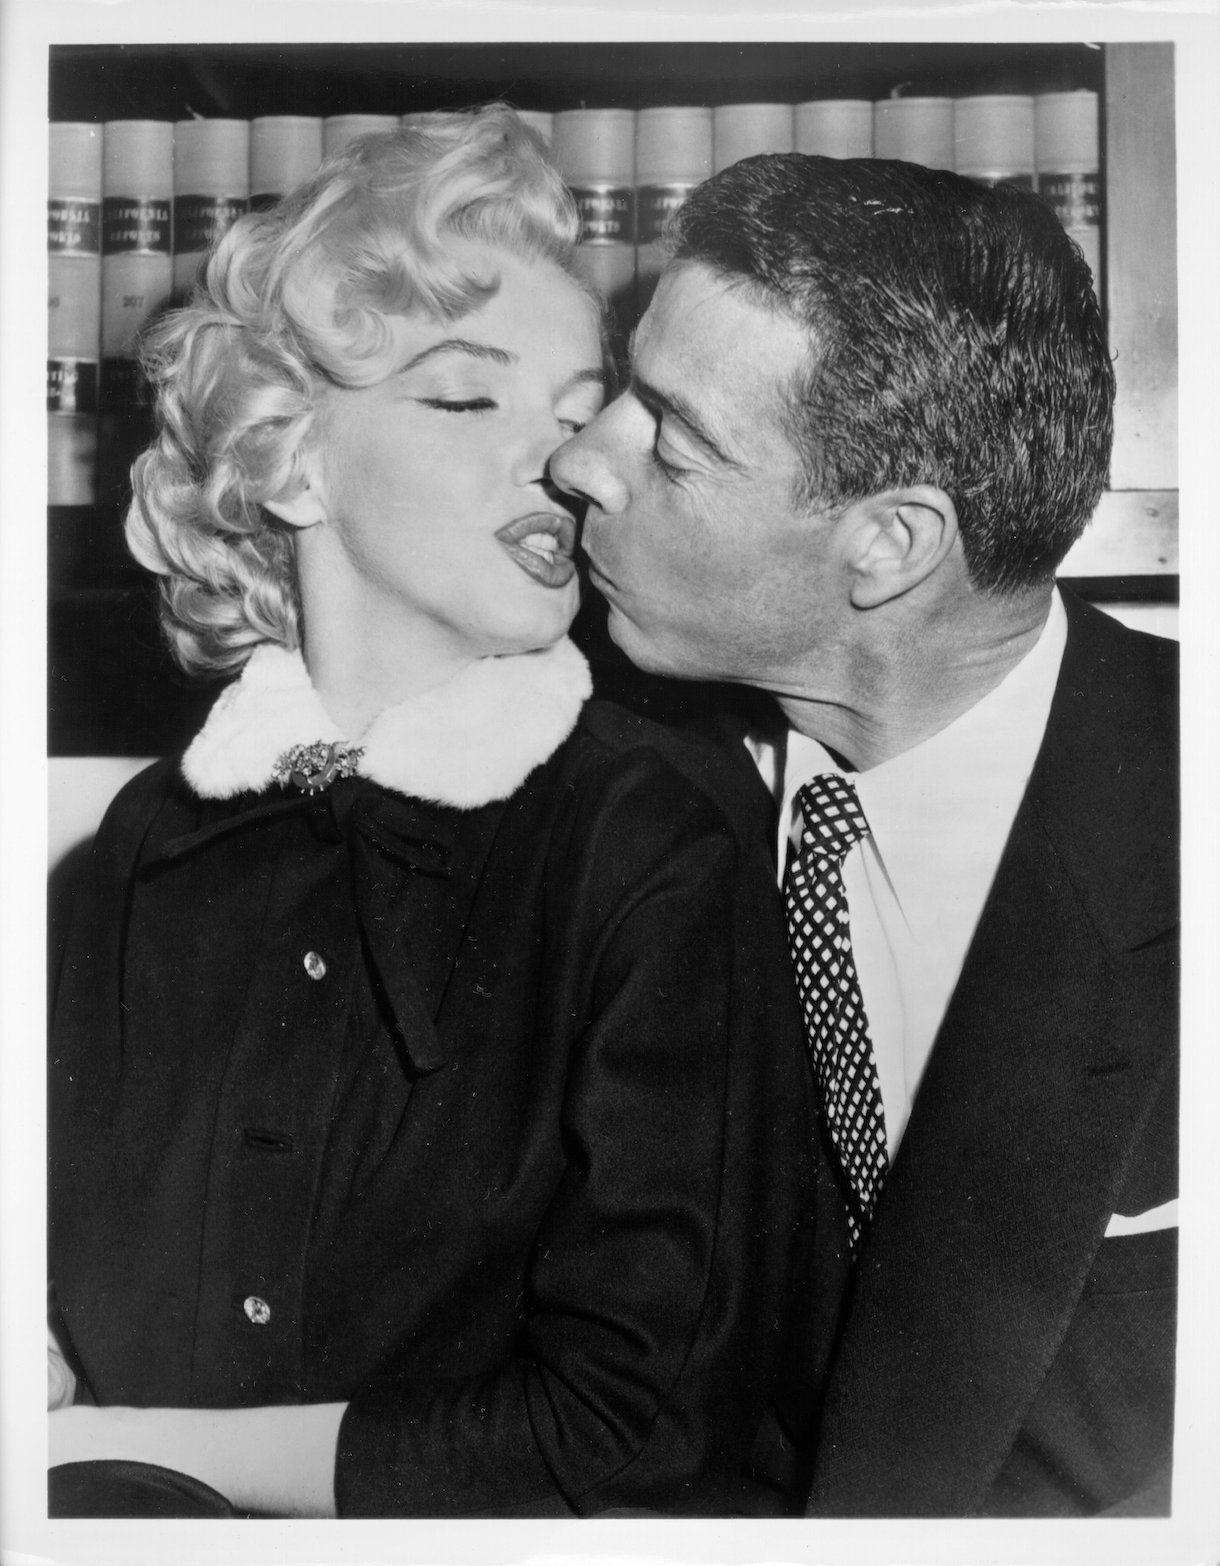 Marilyn Monroe and Joe DiMaggio